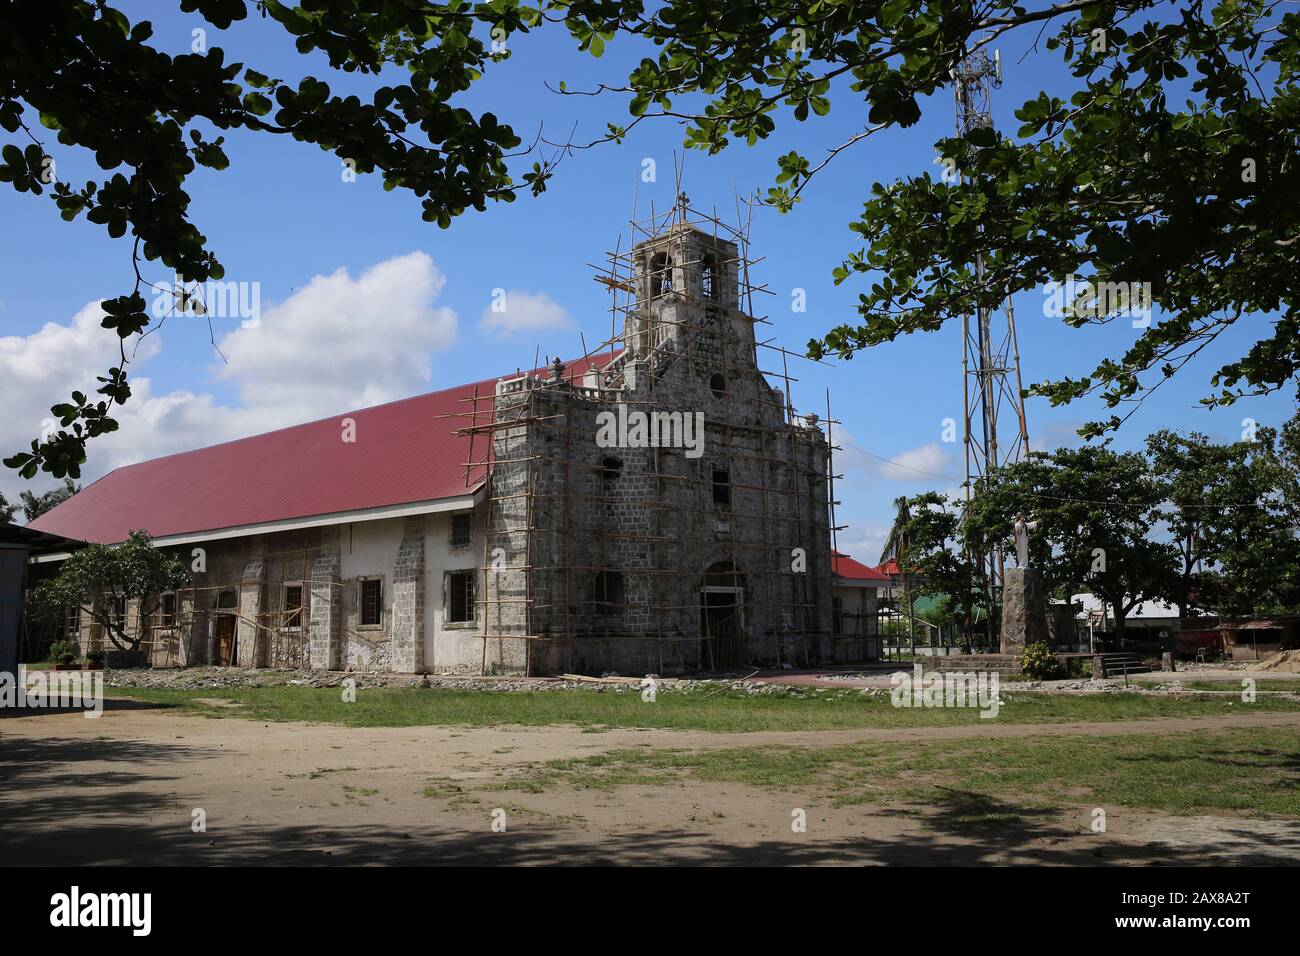 Catholic Church in the Philippines Stock Photo - Alamy